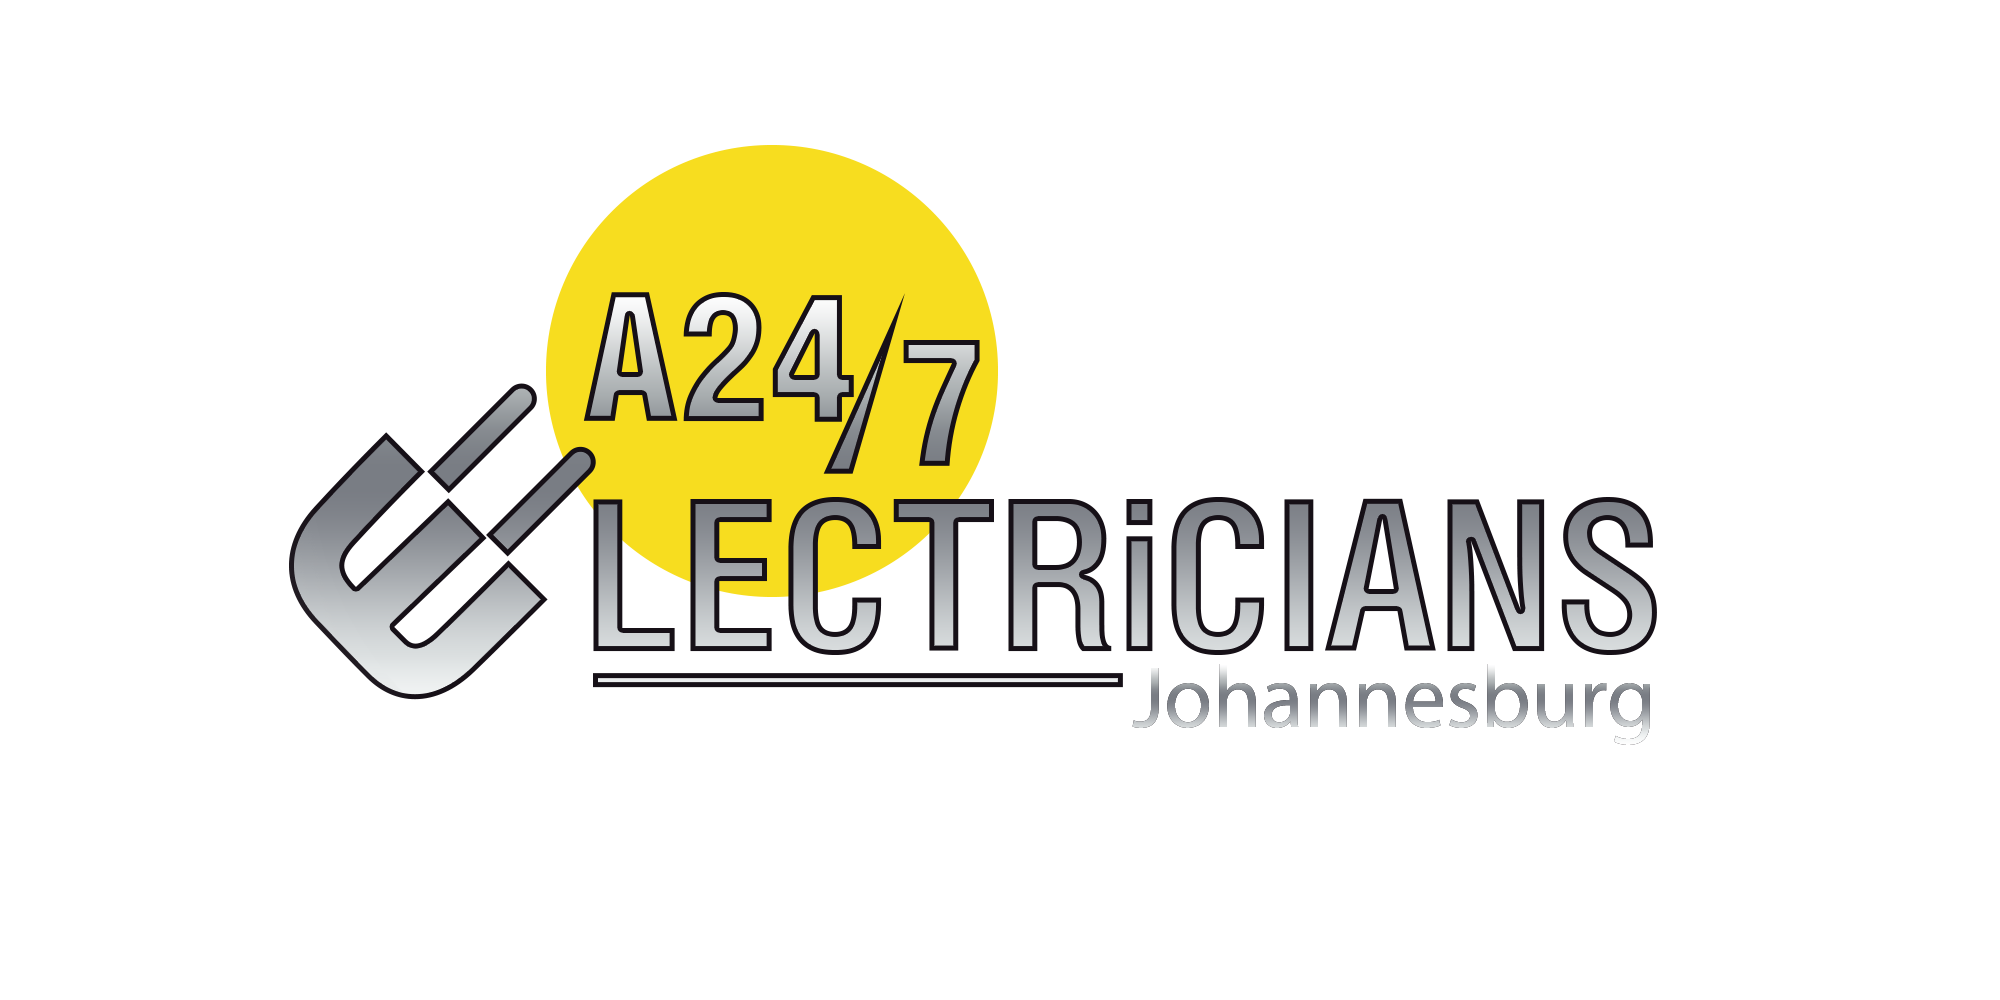 A24 Electricians Johannesburg